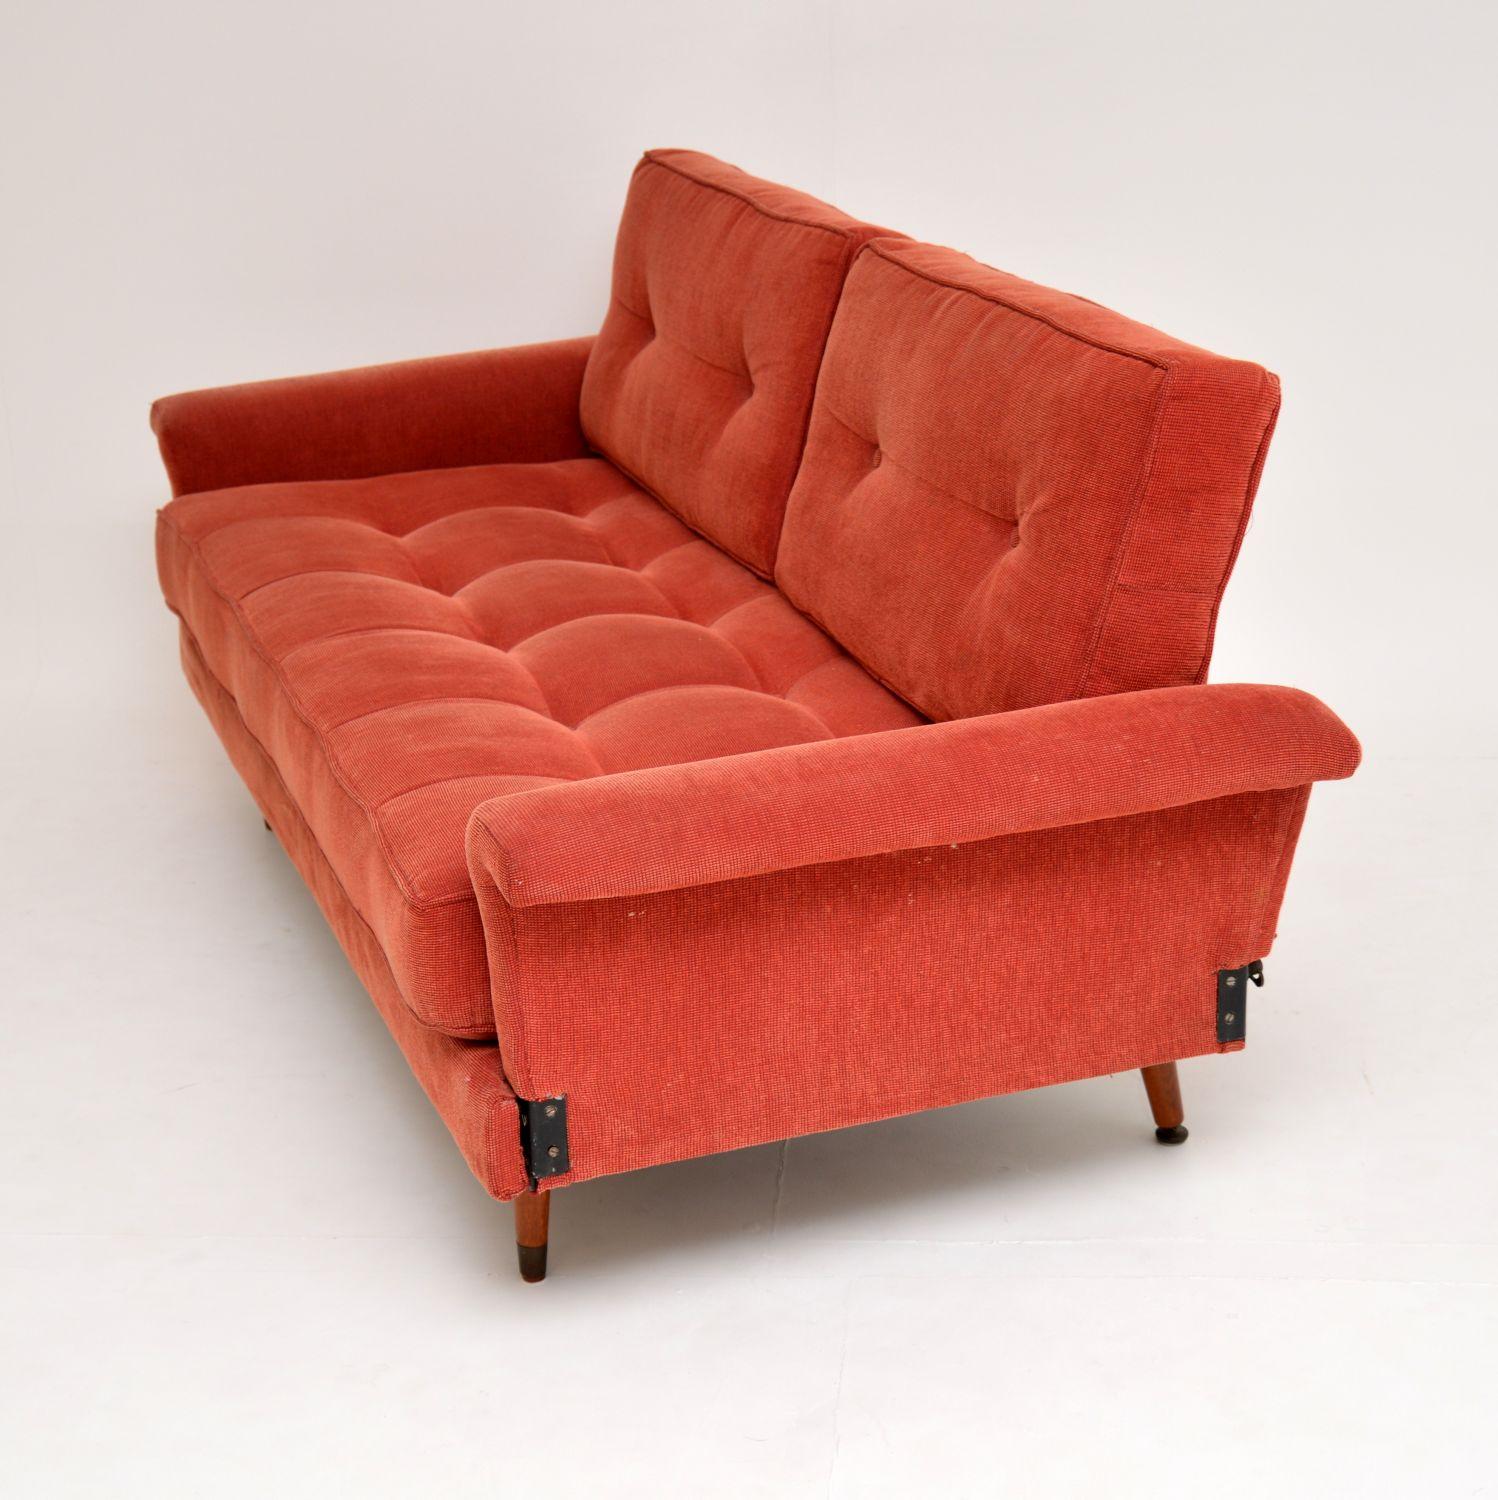 British 1950s Vintage Sofa Bed